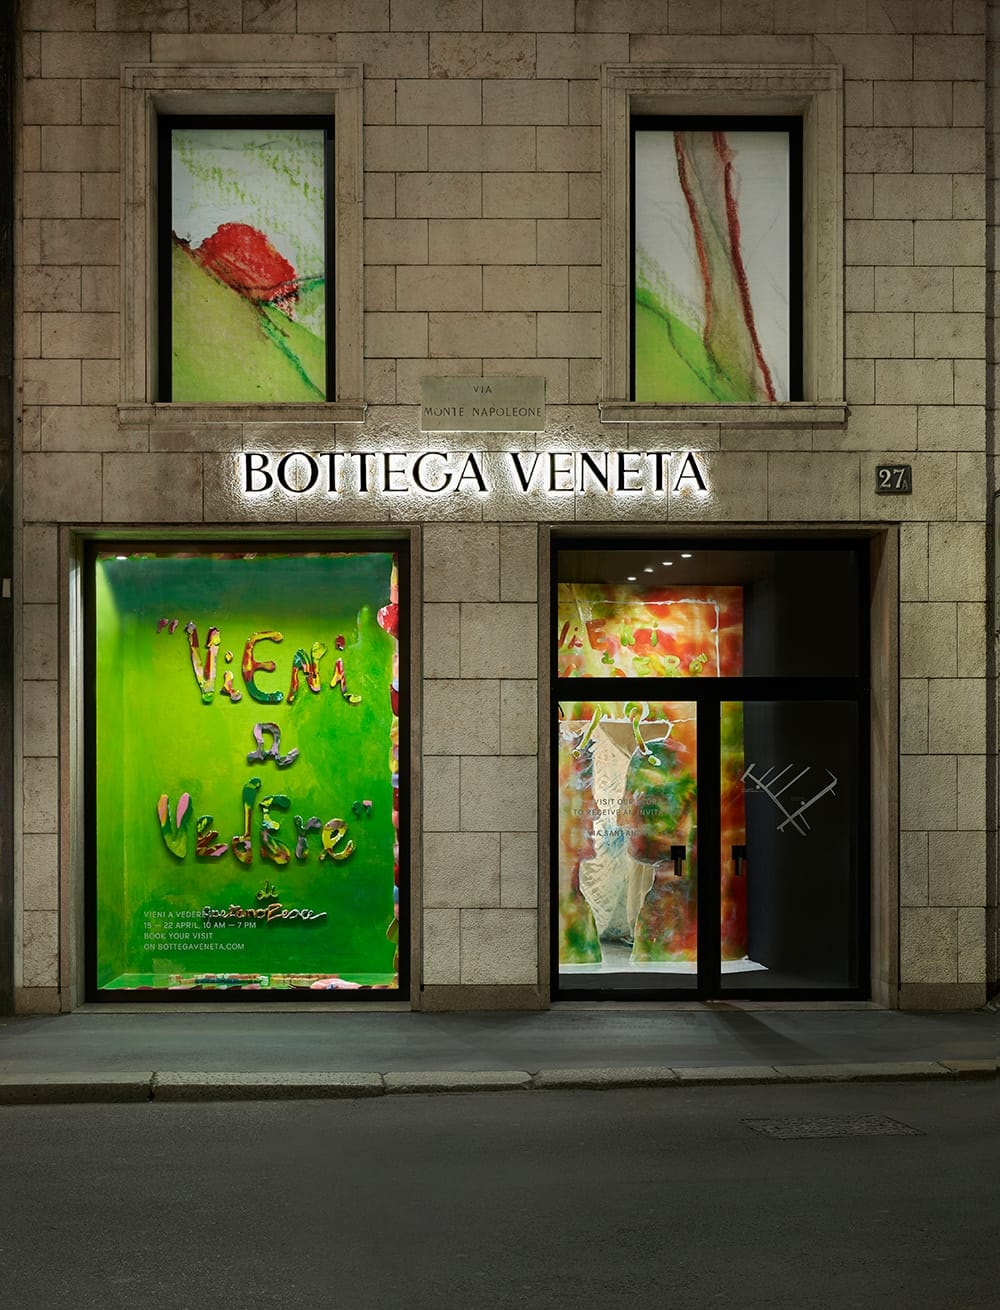 Bottega Veneta 携手 Gaetano Pesce 展出「Vieni a Vedere」最新装置艺术